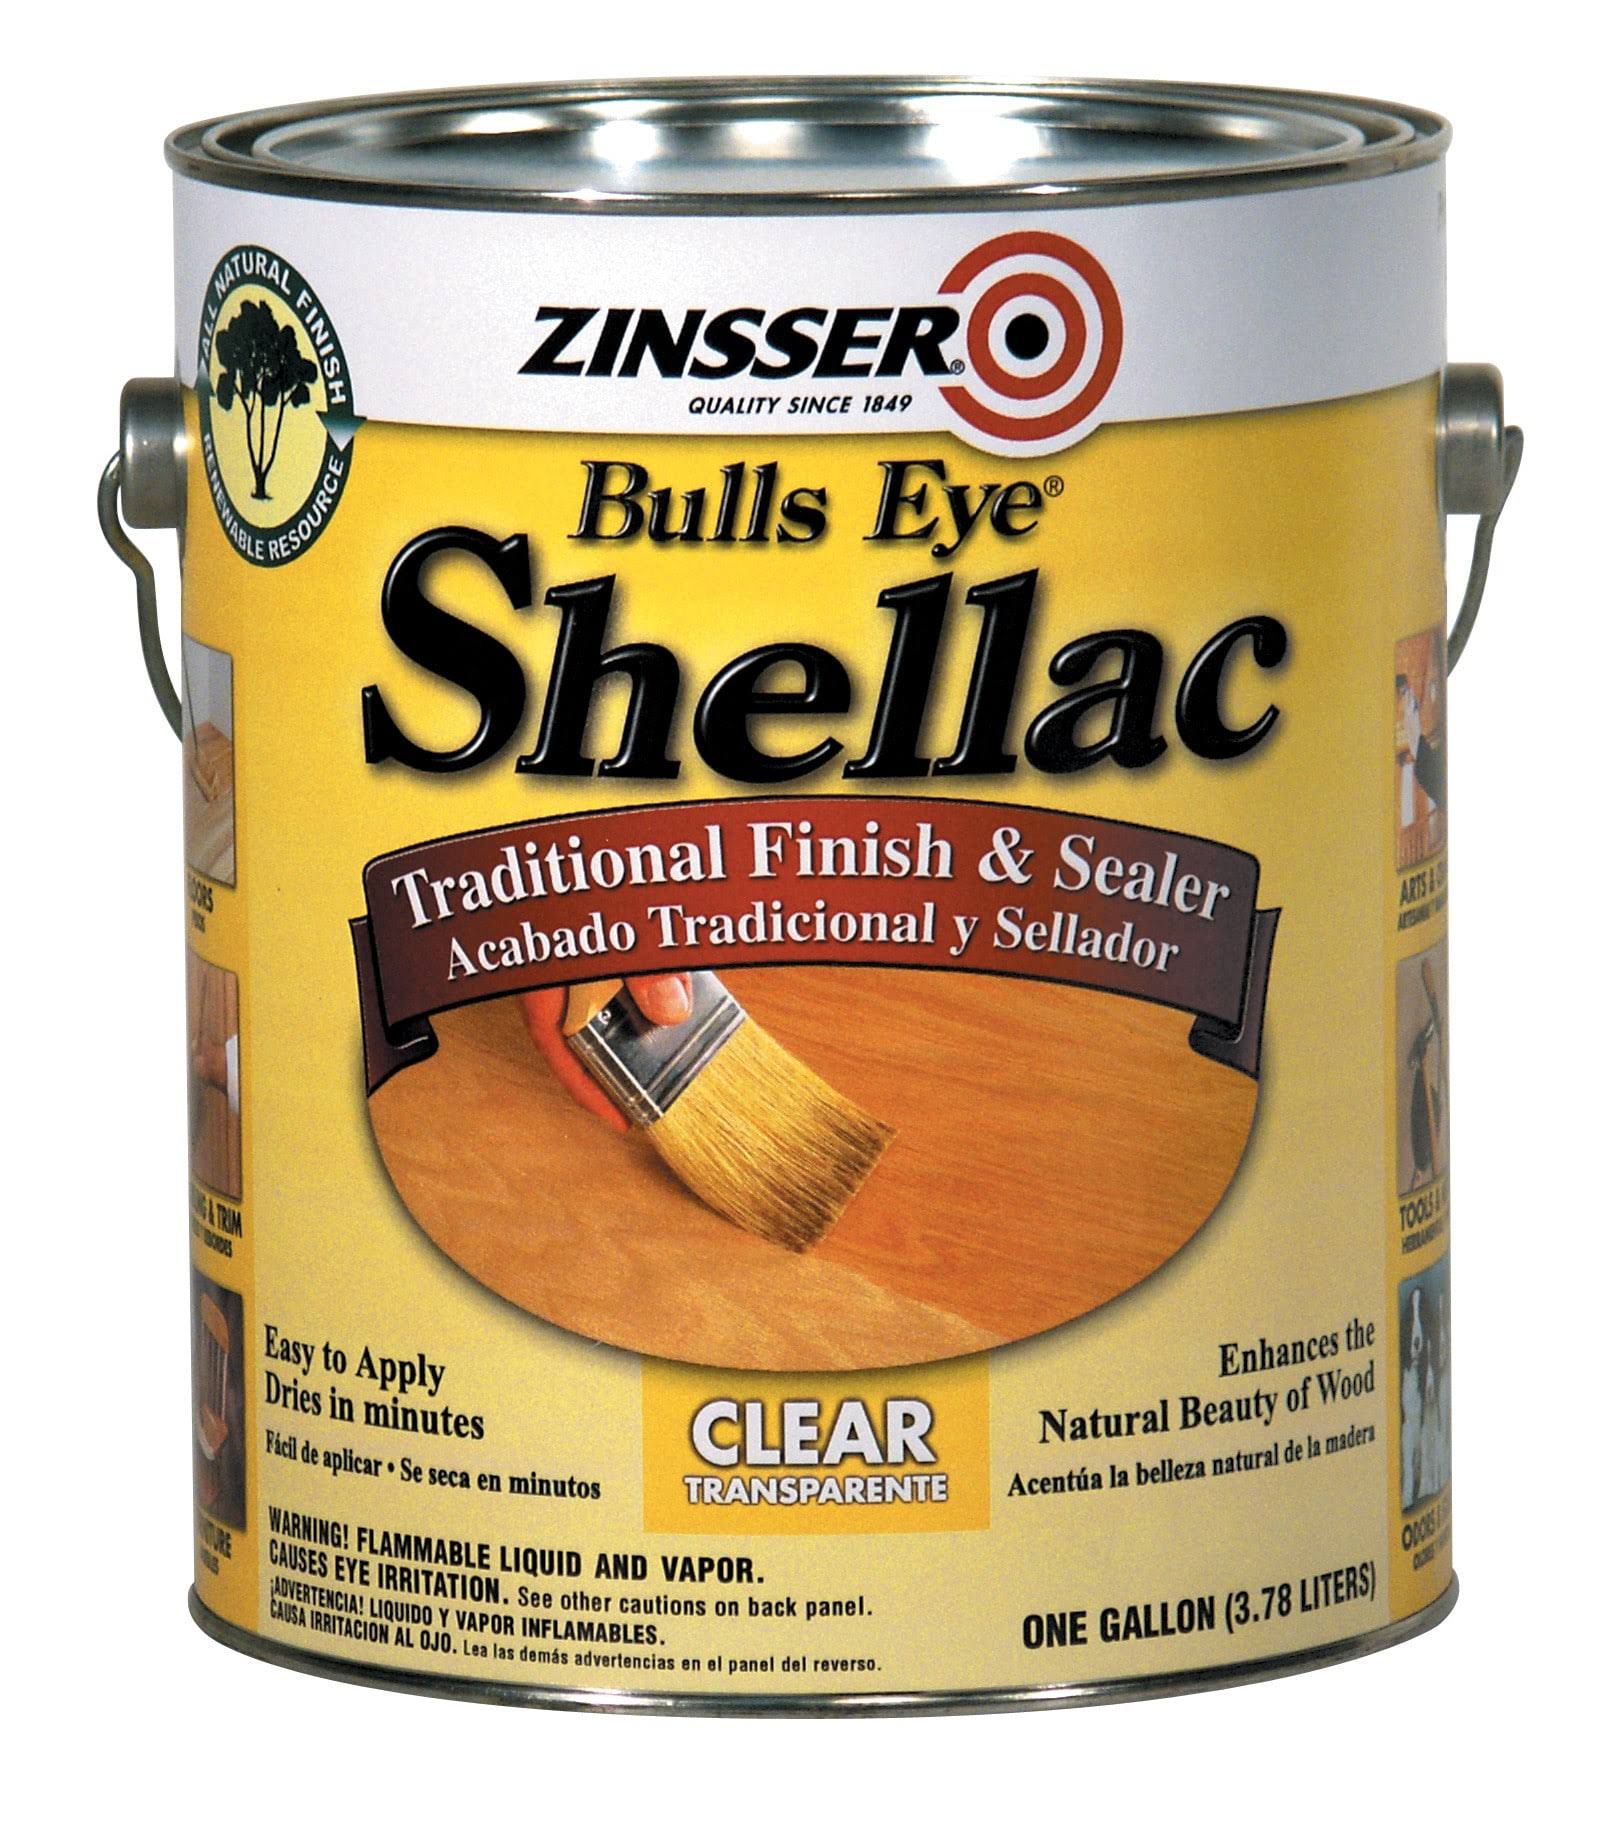 Zinsser Bulls Eye Shellac - Clear, 1 Gallon